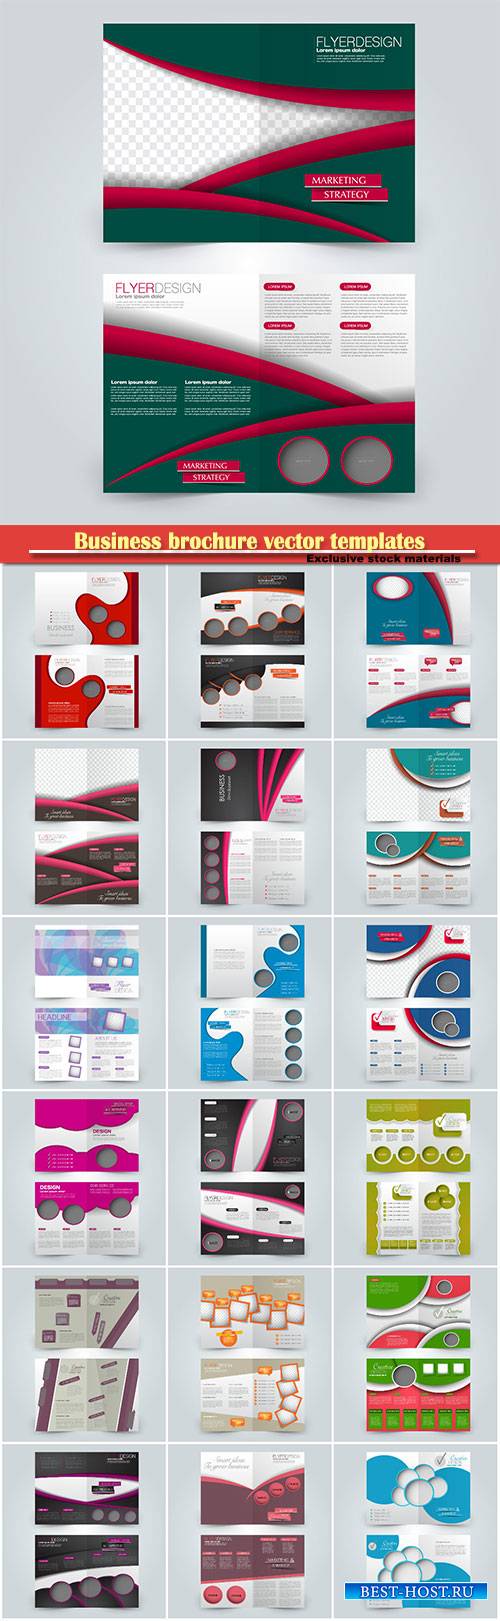 Business brochure vector templates, magazine cover, business mockup, education, presentation, report # 51